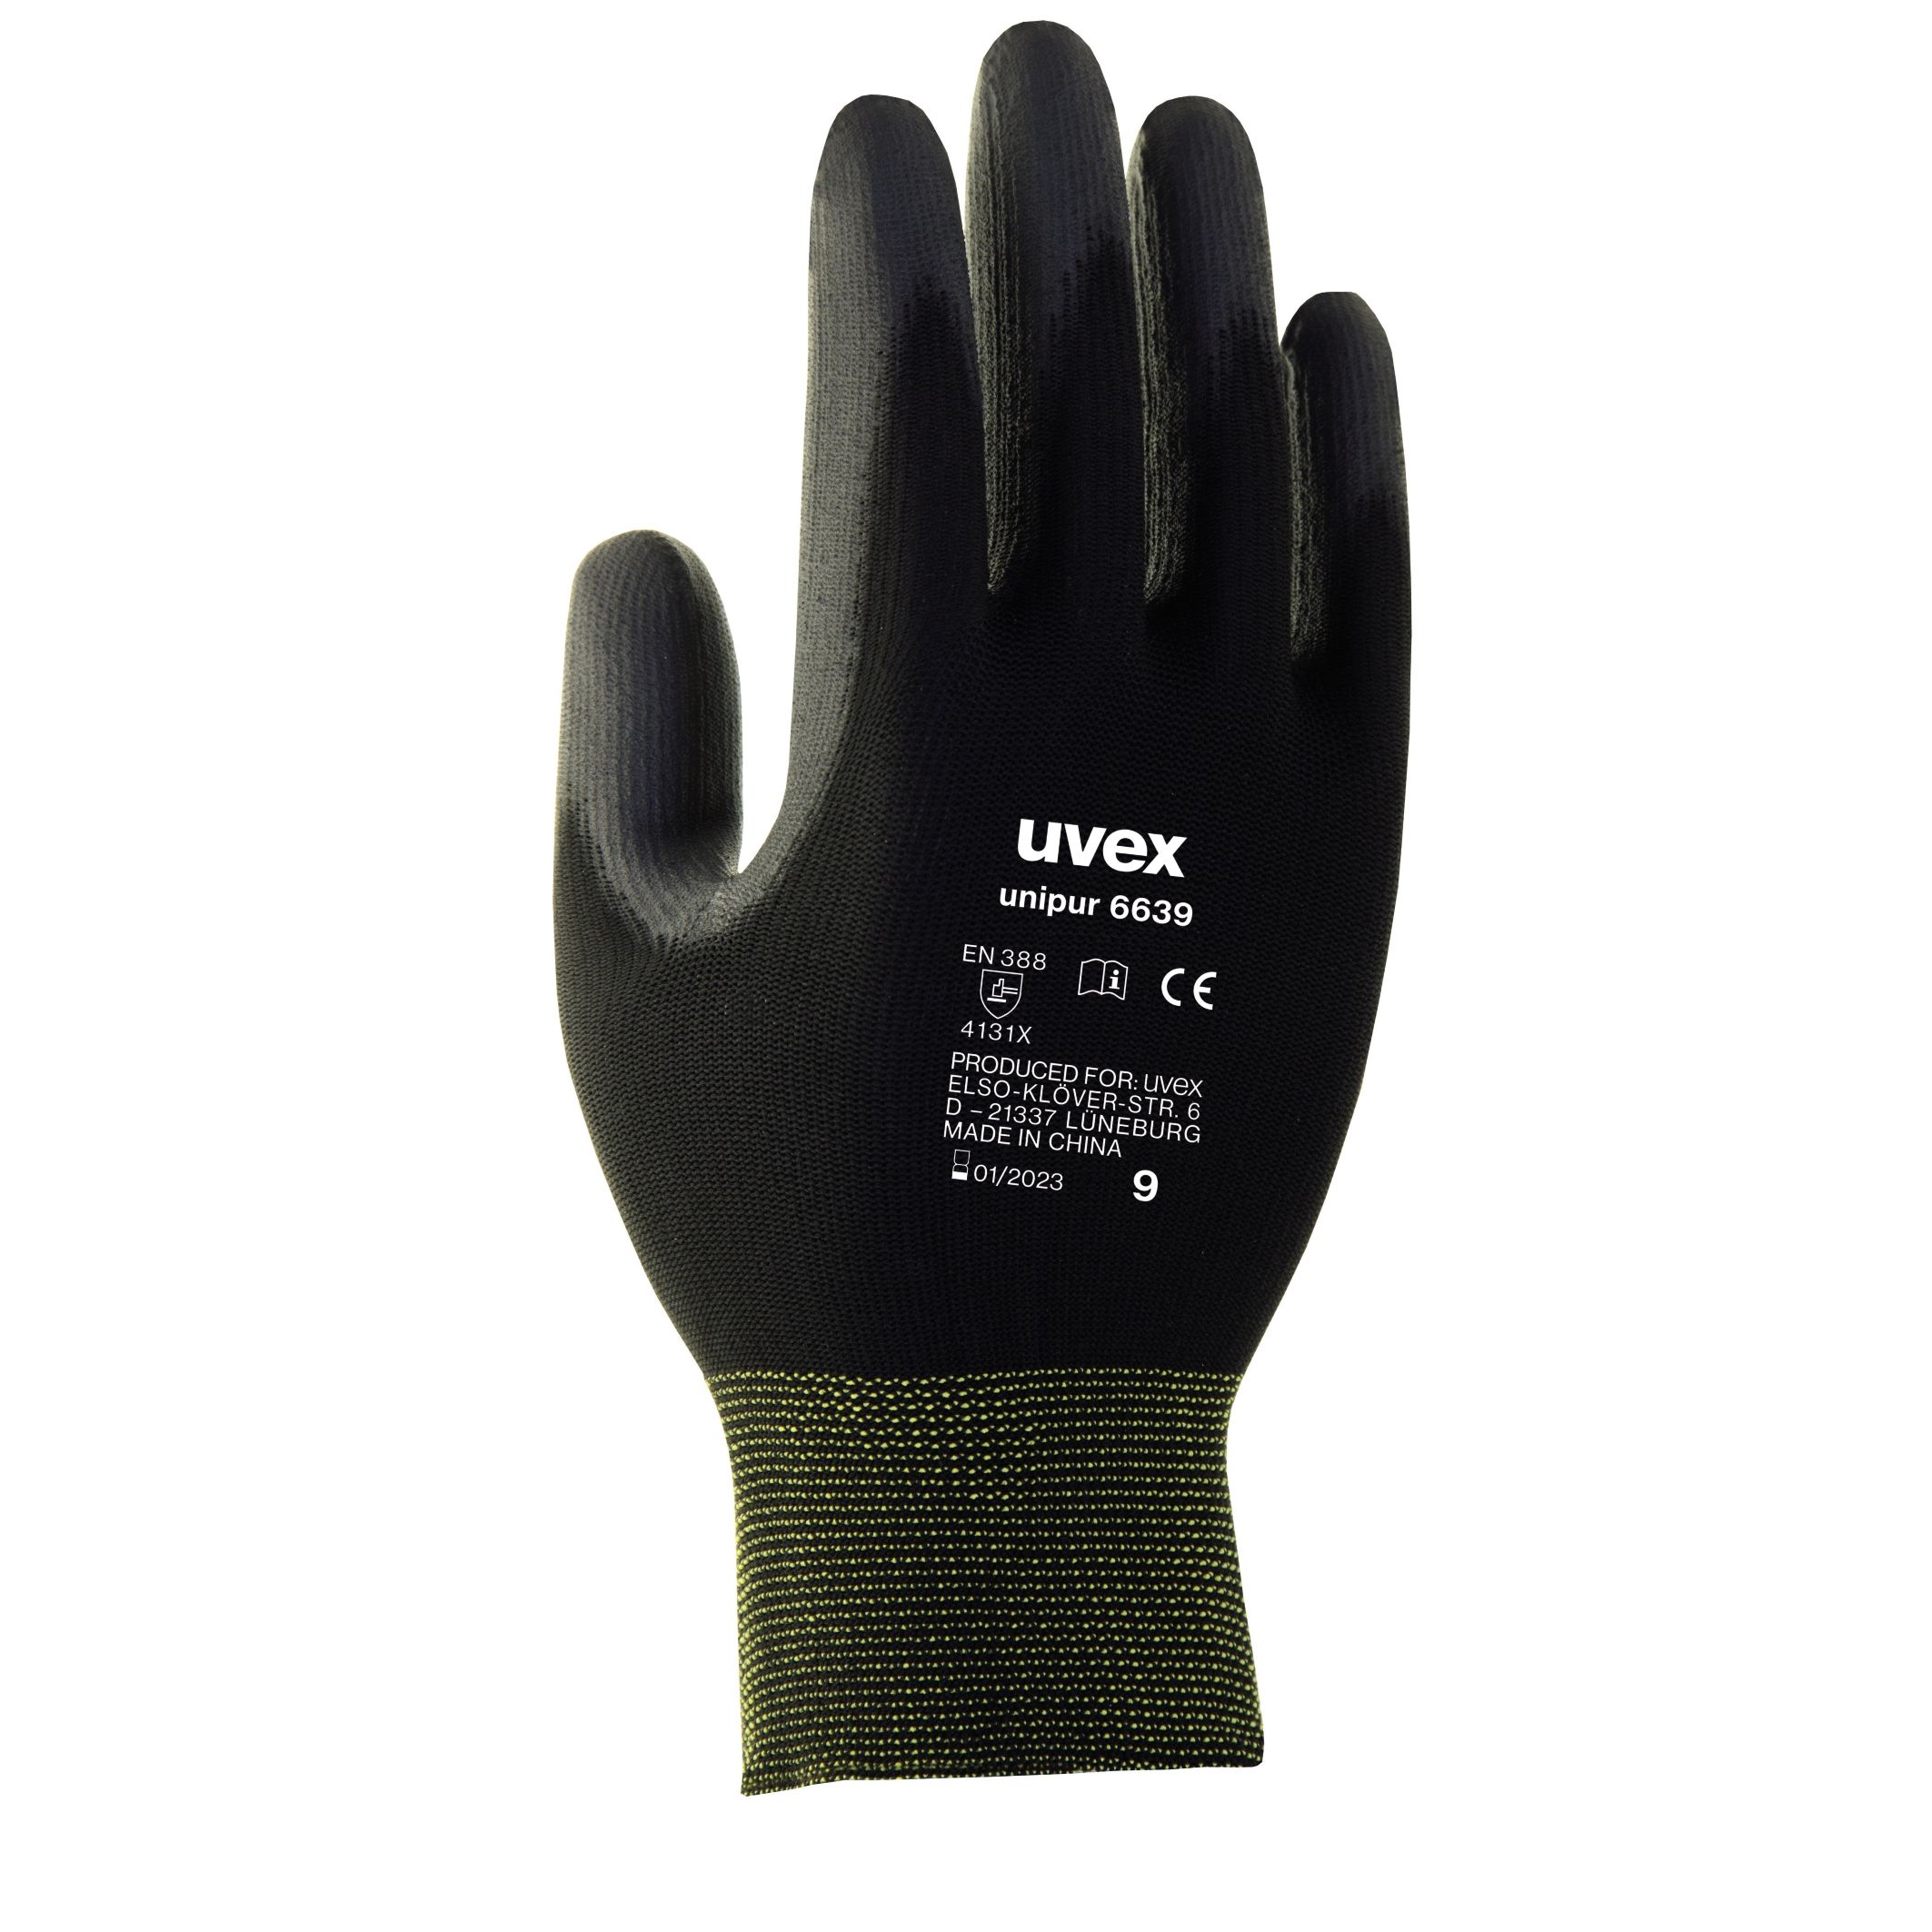 uvex Unipur 6639 Safety Gloves - Black - Medium  (8)